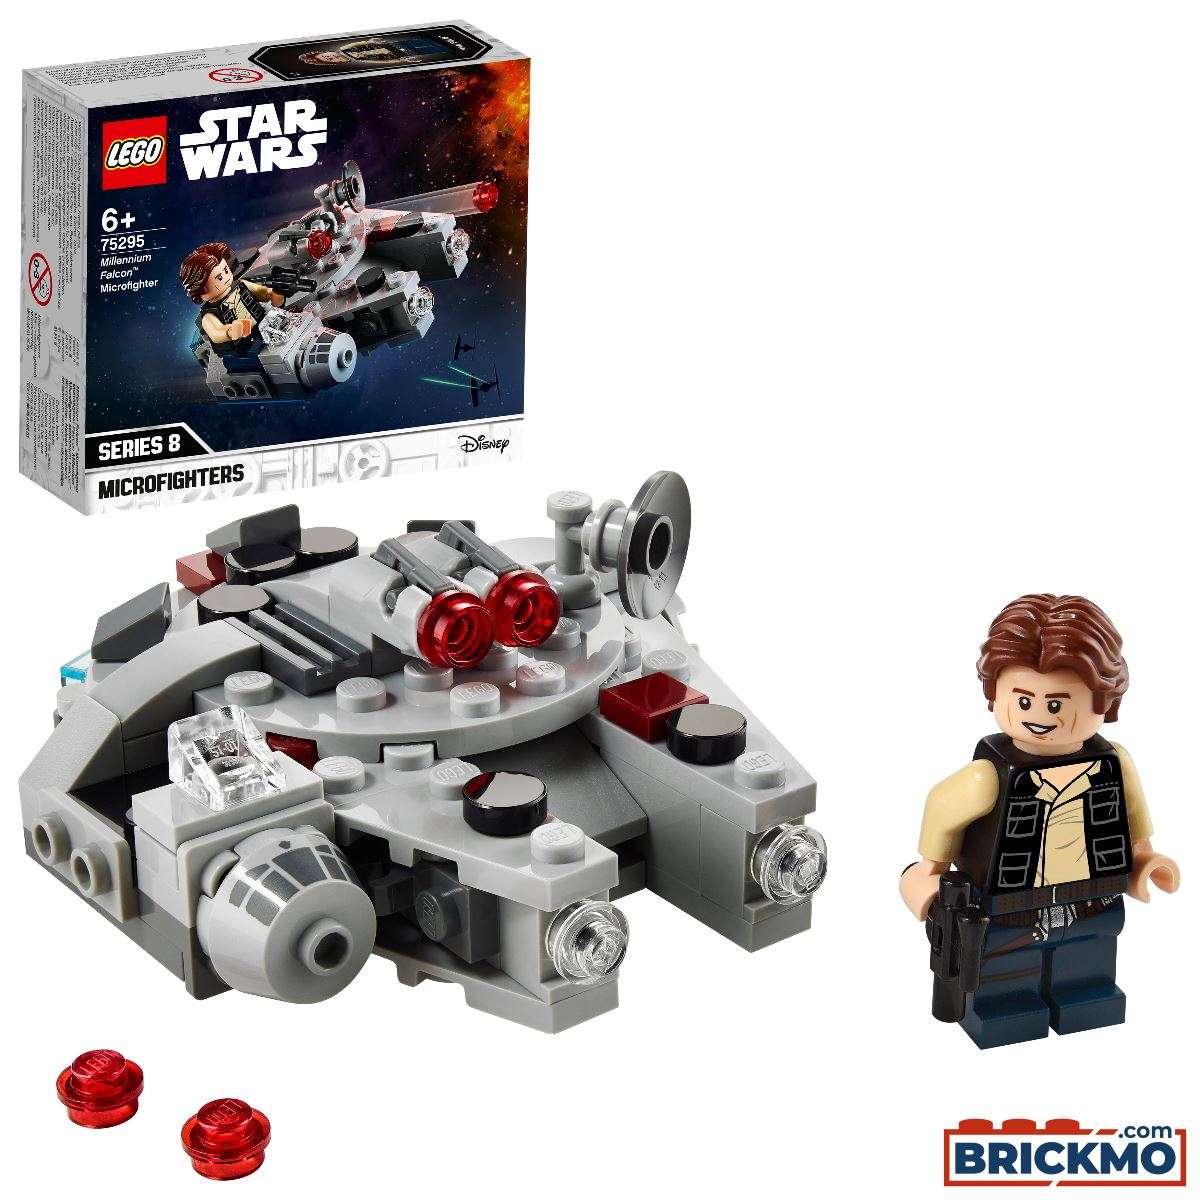 LEGO Star Wars 75295 Millenium Falcon Microfighter 75295